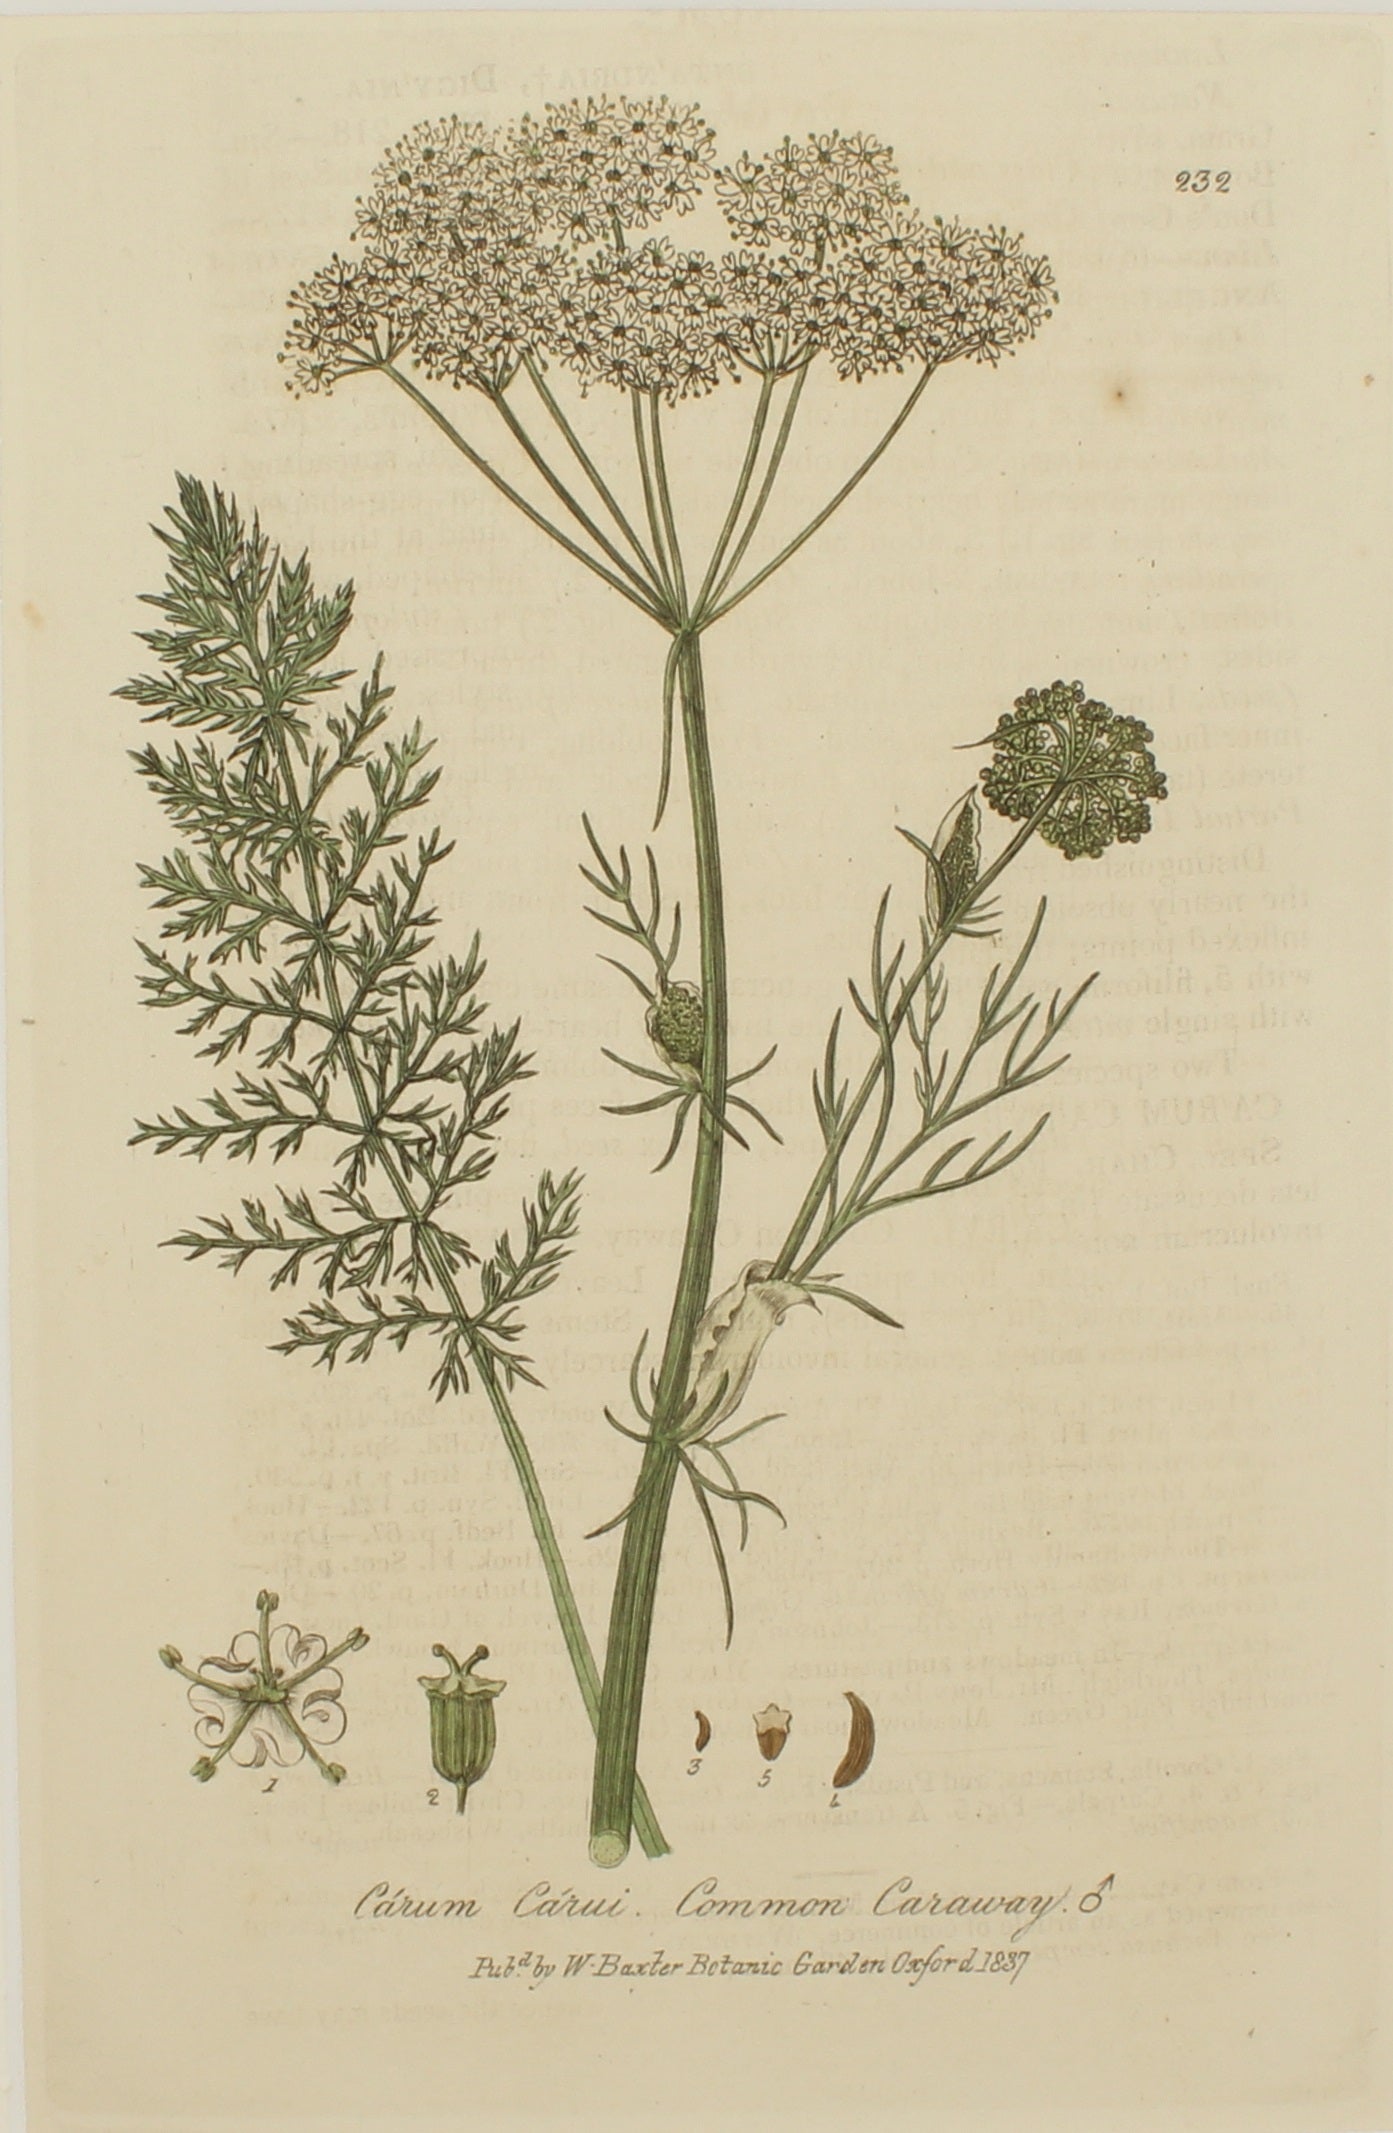 Botanical, Baxter William, Common Caraway, 1840-1843